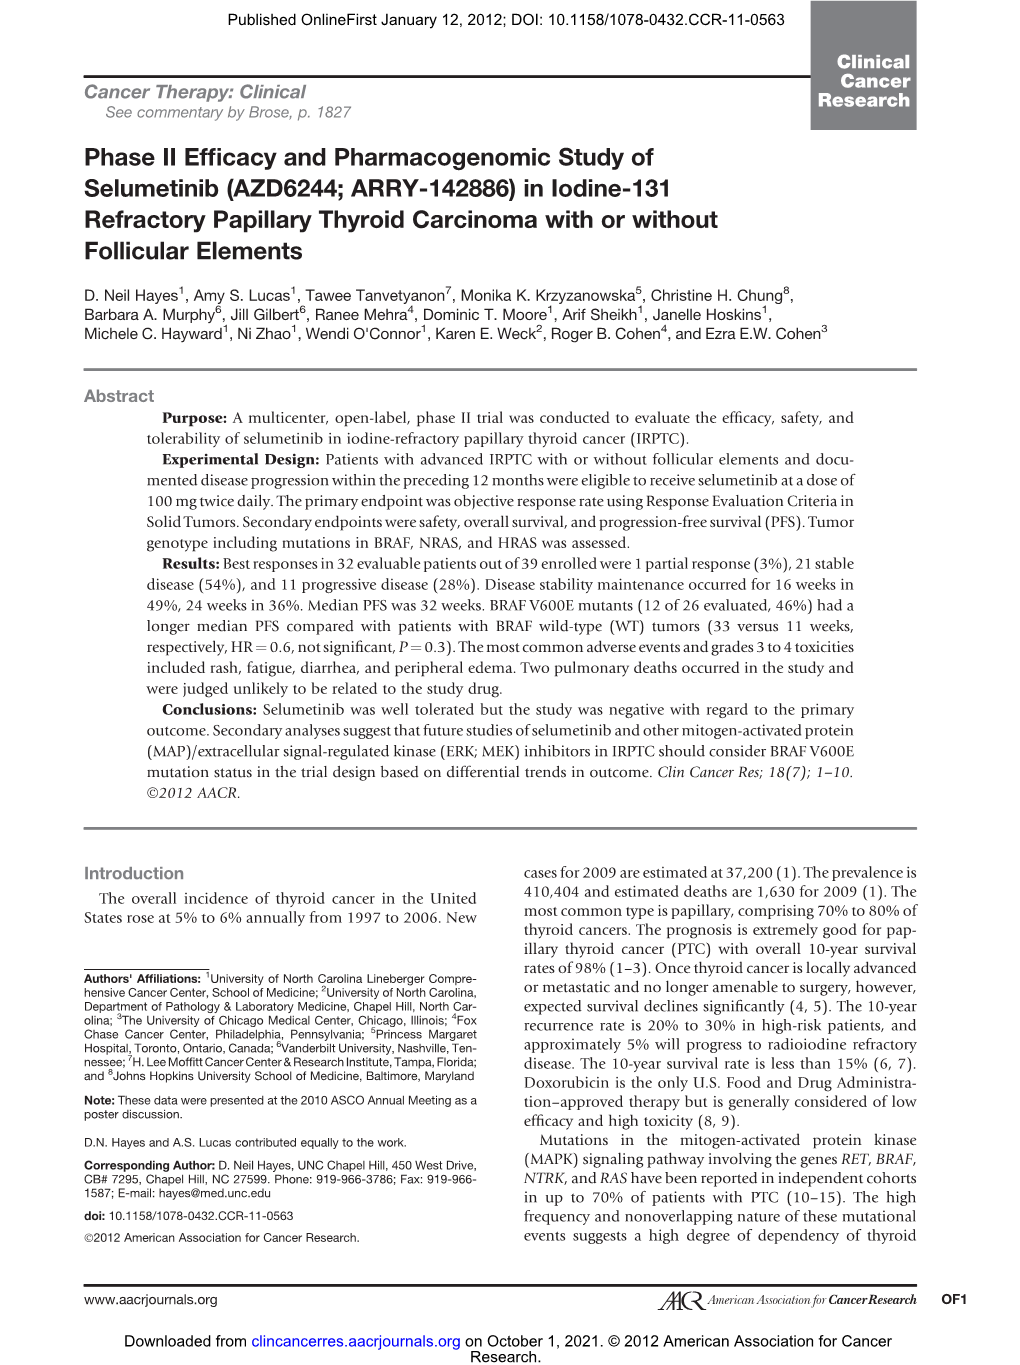 Phase II Efficacy and Pharmacogenomic Study of Selumetinib